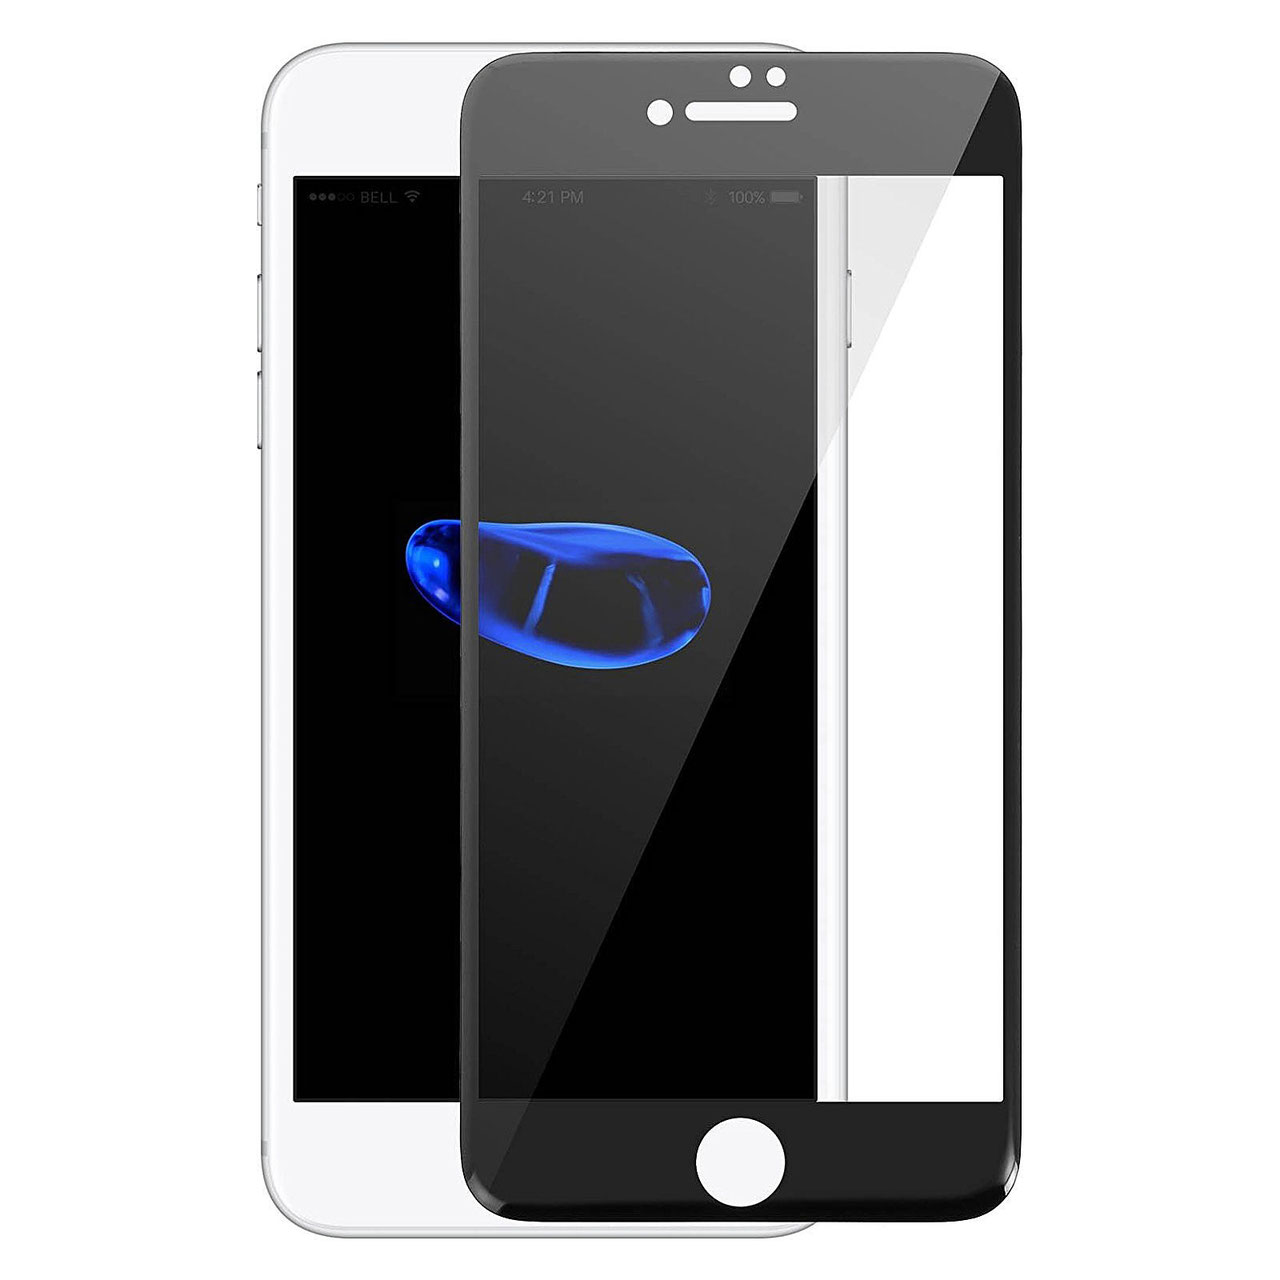 IPhone XR - Site de Tech-iphone!